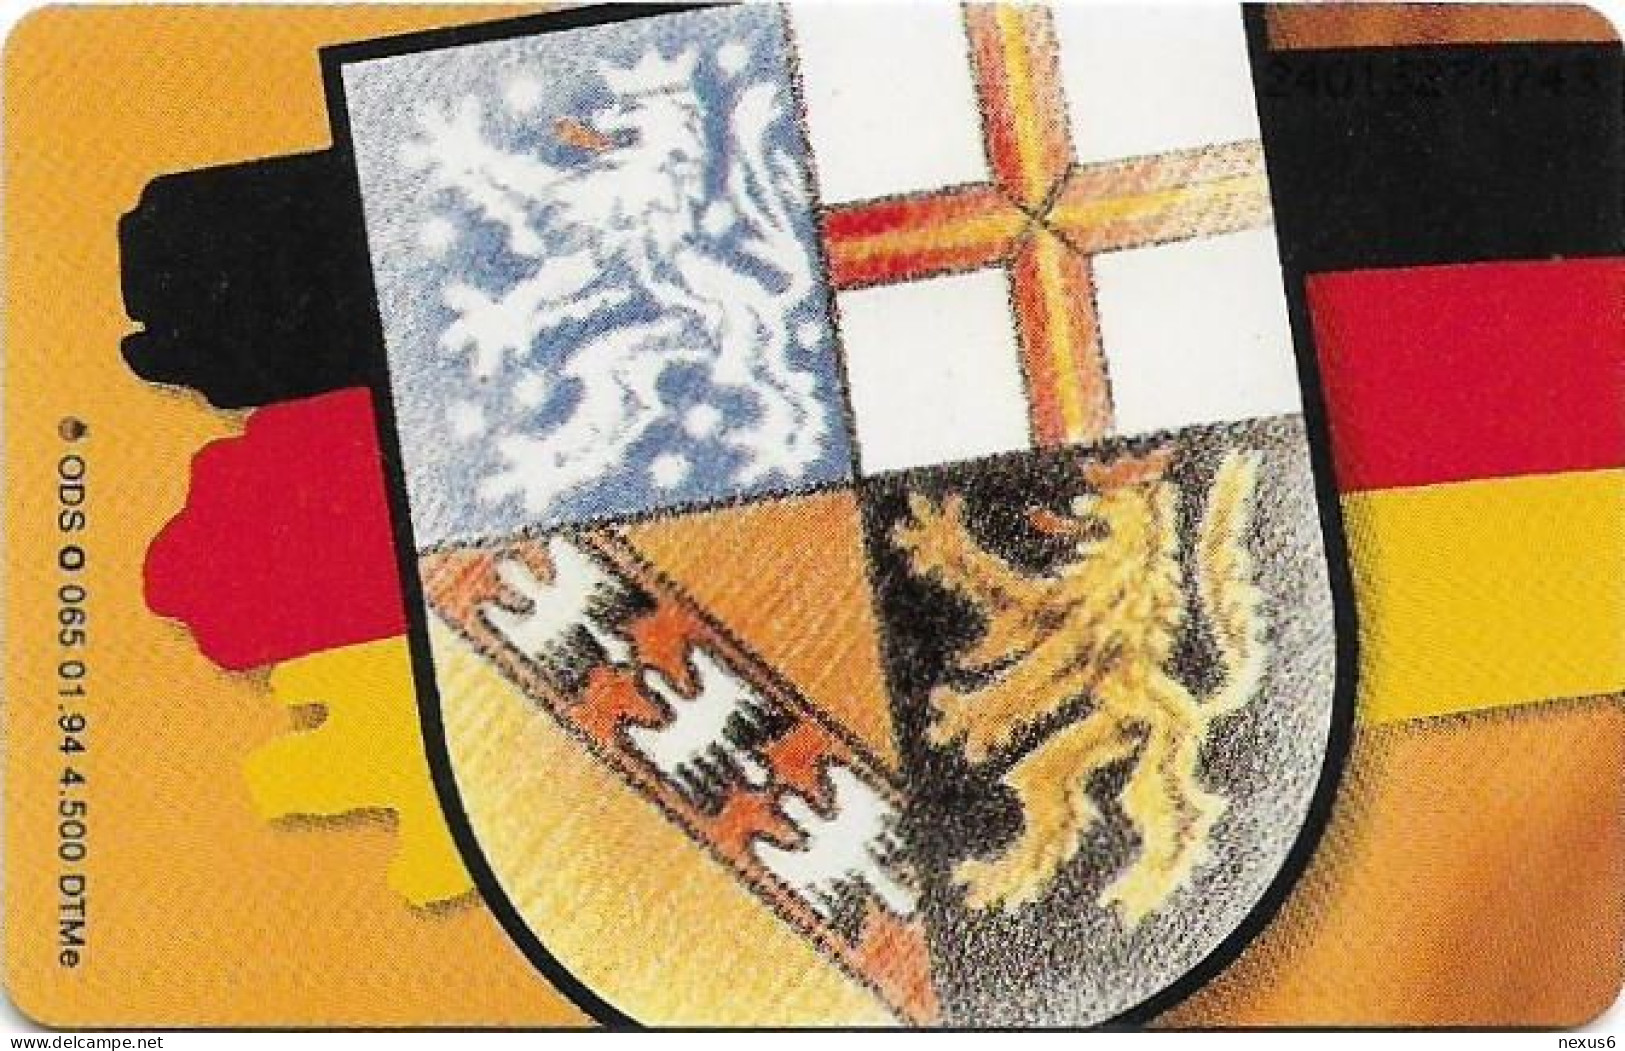 Germany - Wappen Der BRD - Saarland (Ludwigskirche) - O 0065 - 01.1994, 6DM, 4.500ex, Mint - O-Series : Series Clientes Excluidos Servicio De Colección